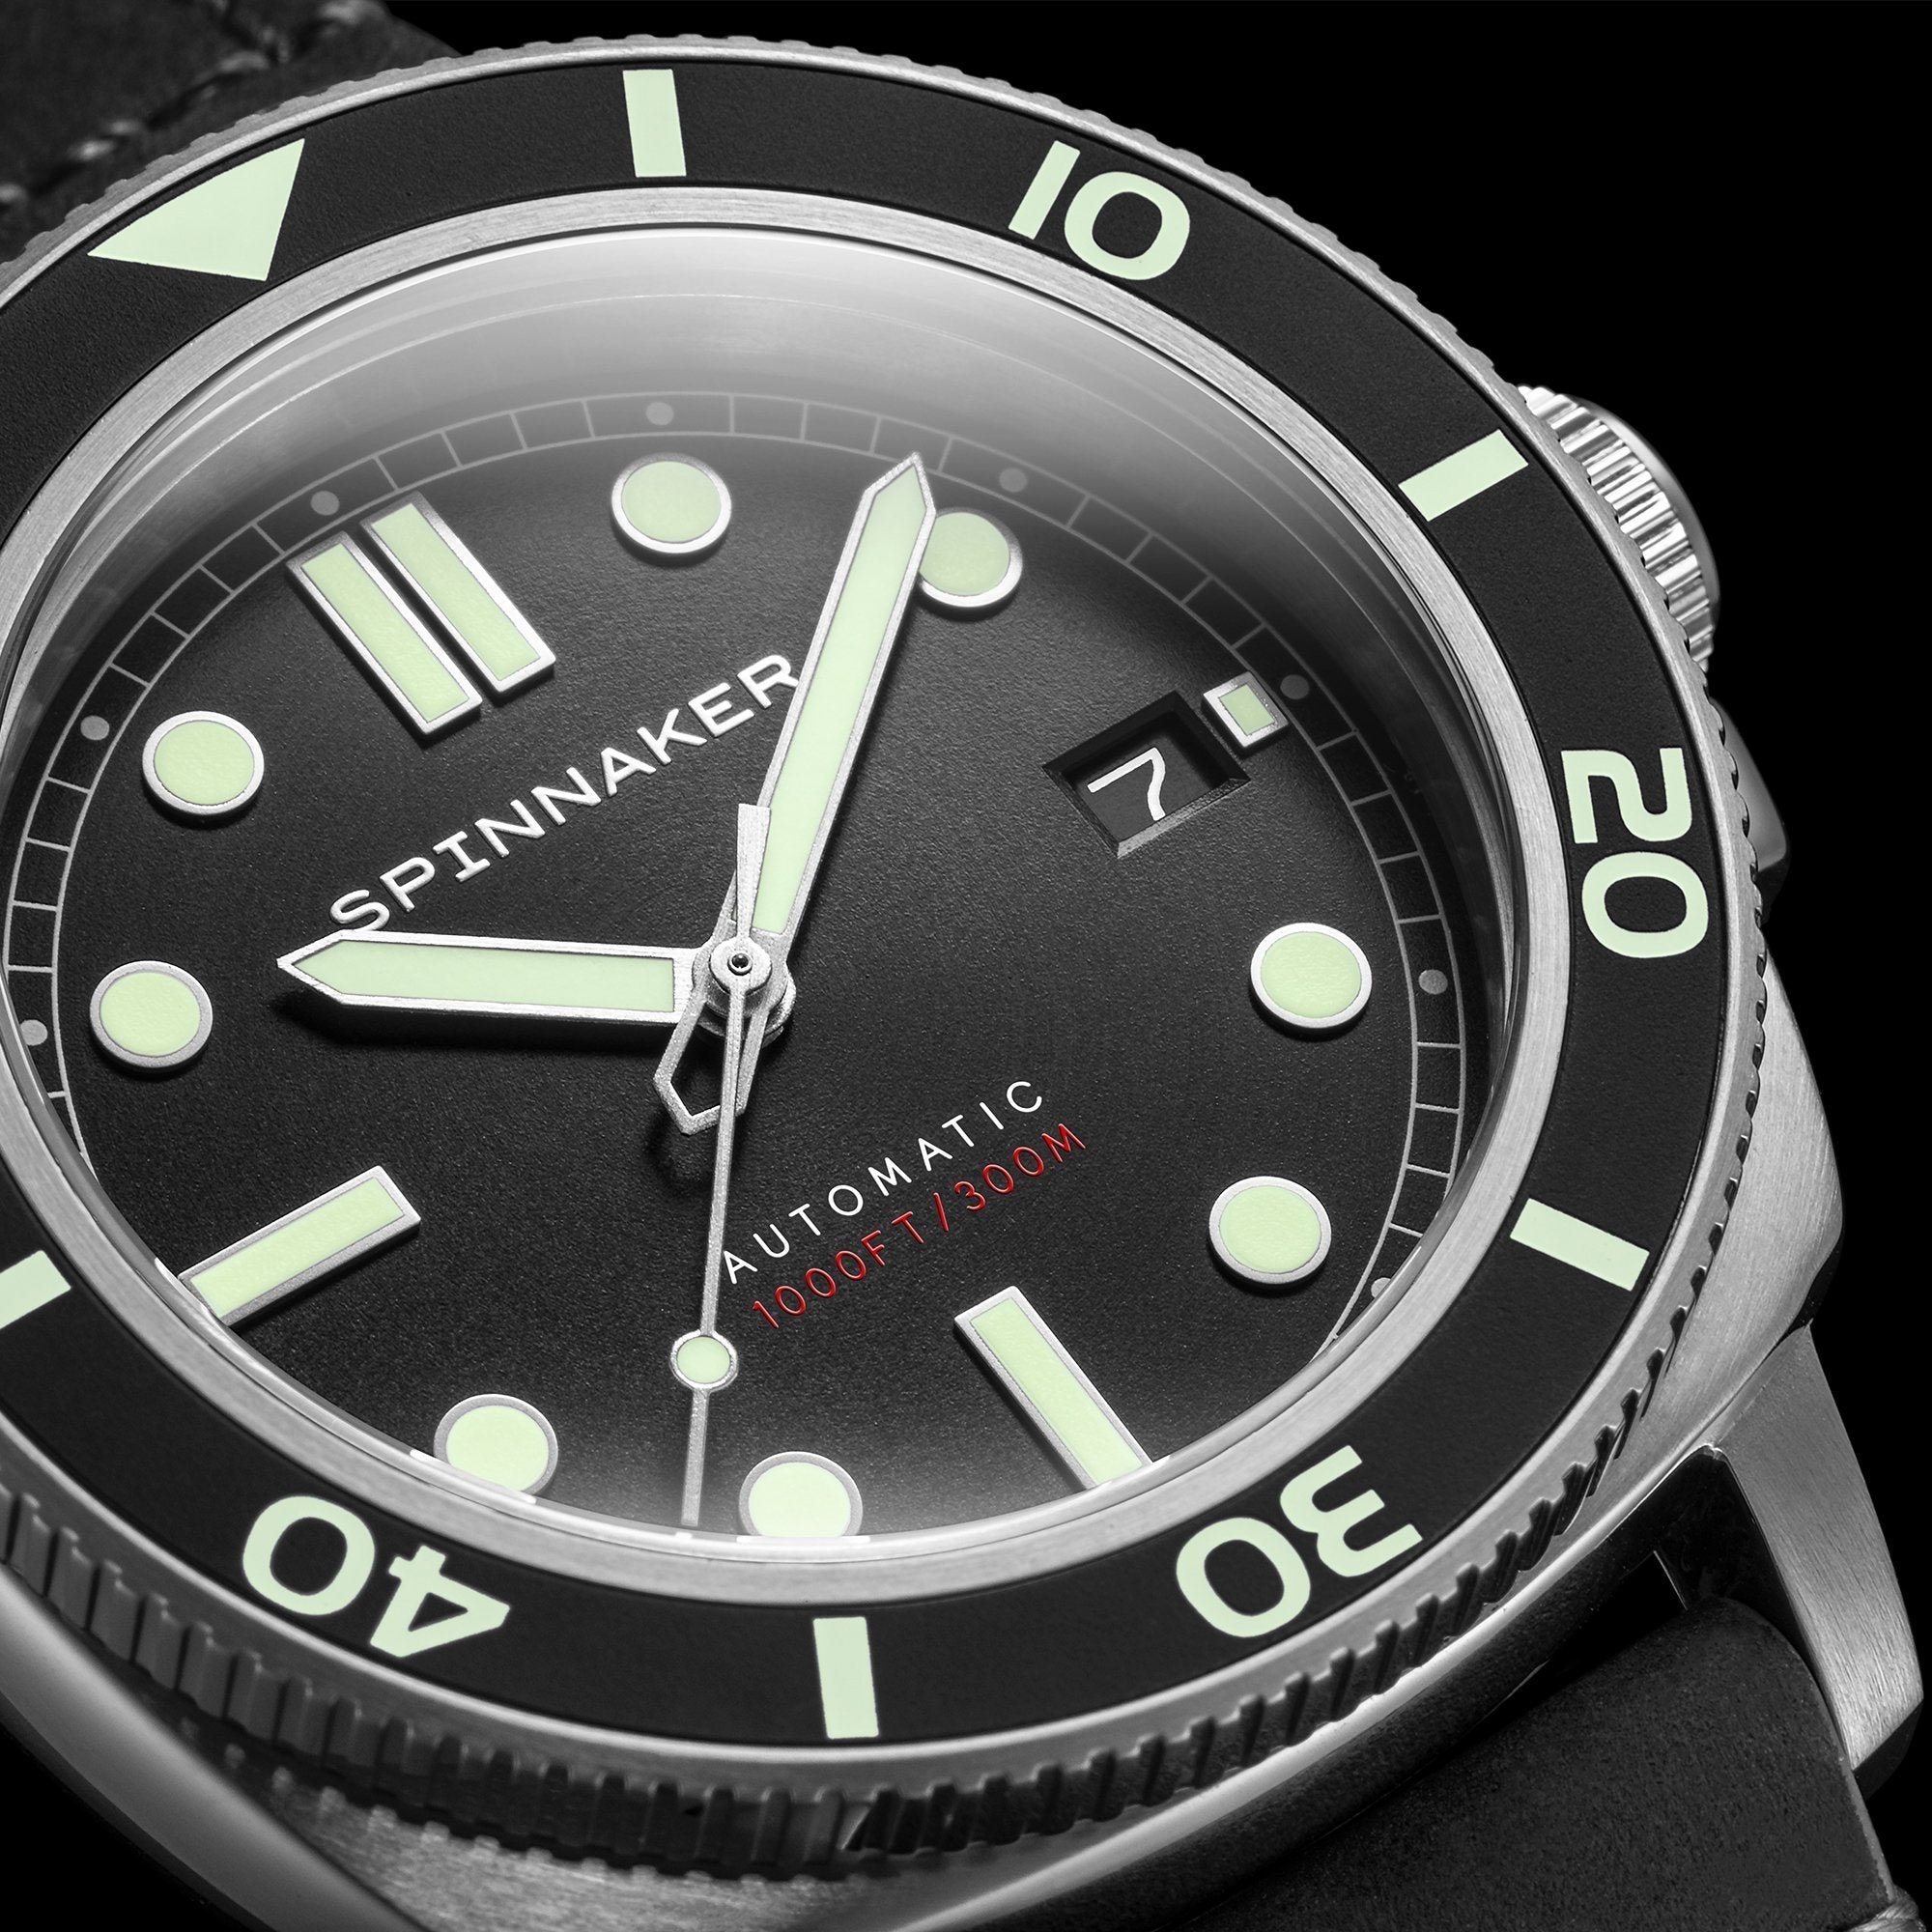 SPINNAKER Spinnaker Hull Diver Men's Automatic Tuxedo Black Watch SP-5088-01